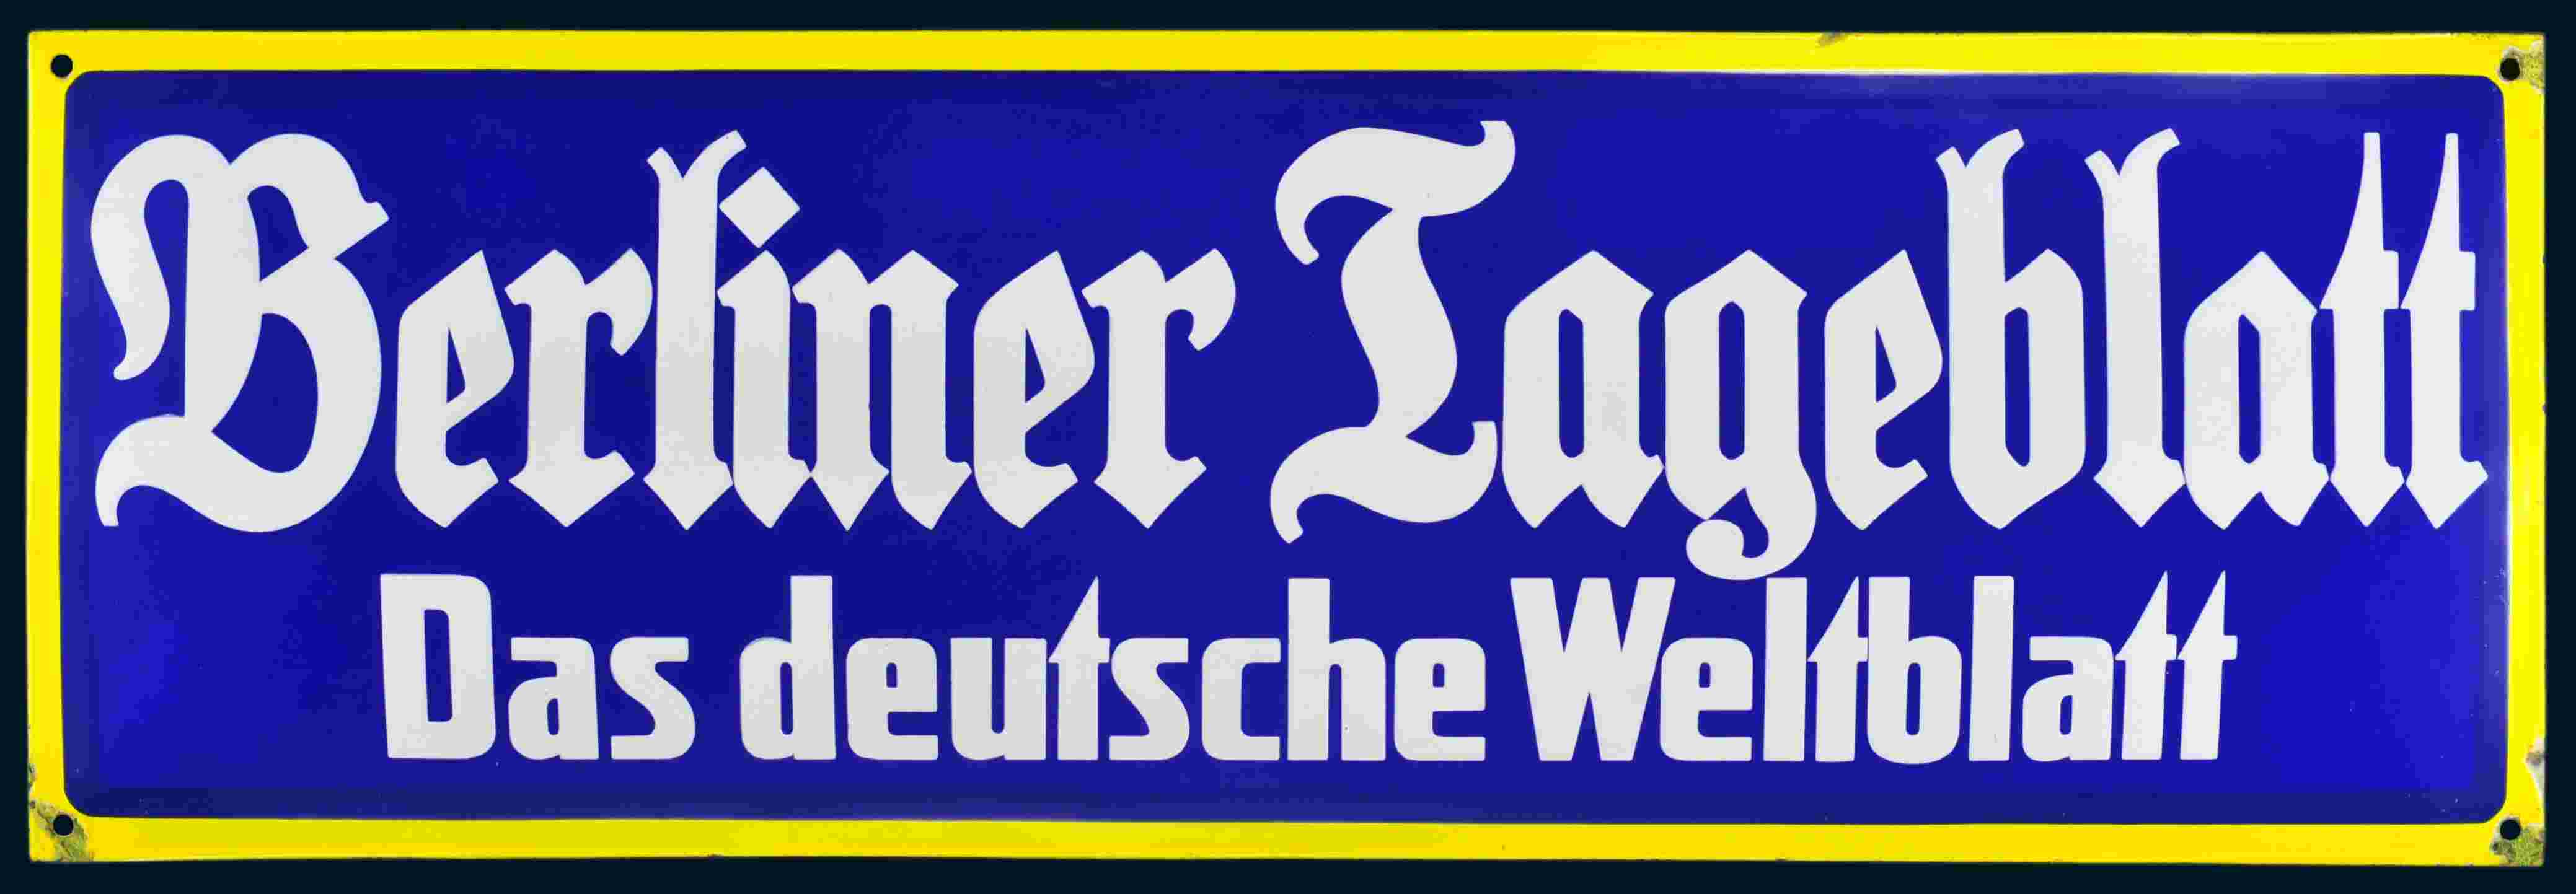 Berliner Tageblatt Das deutsche Weltblatt 